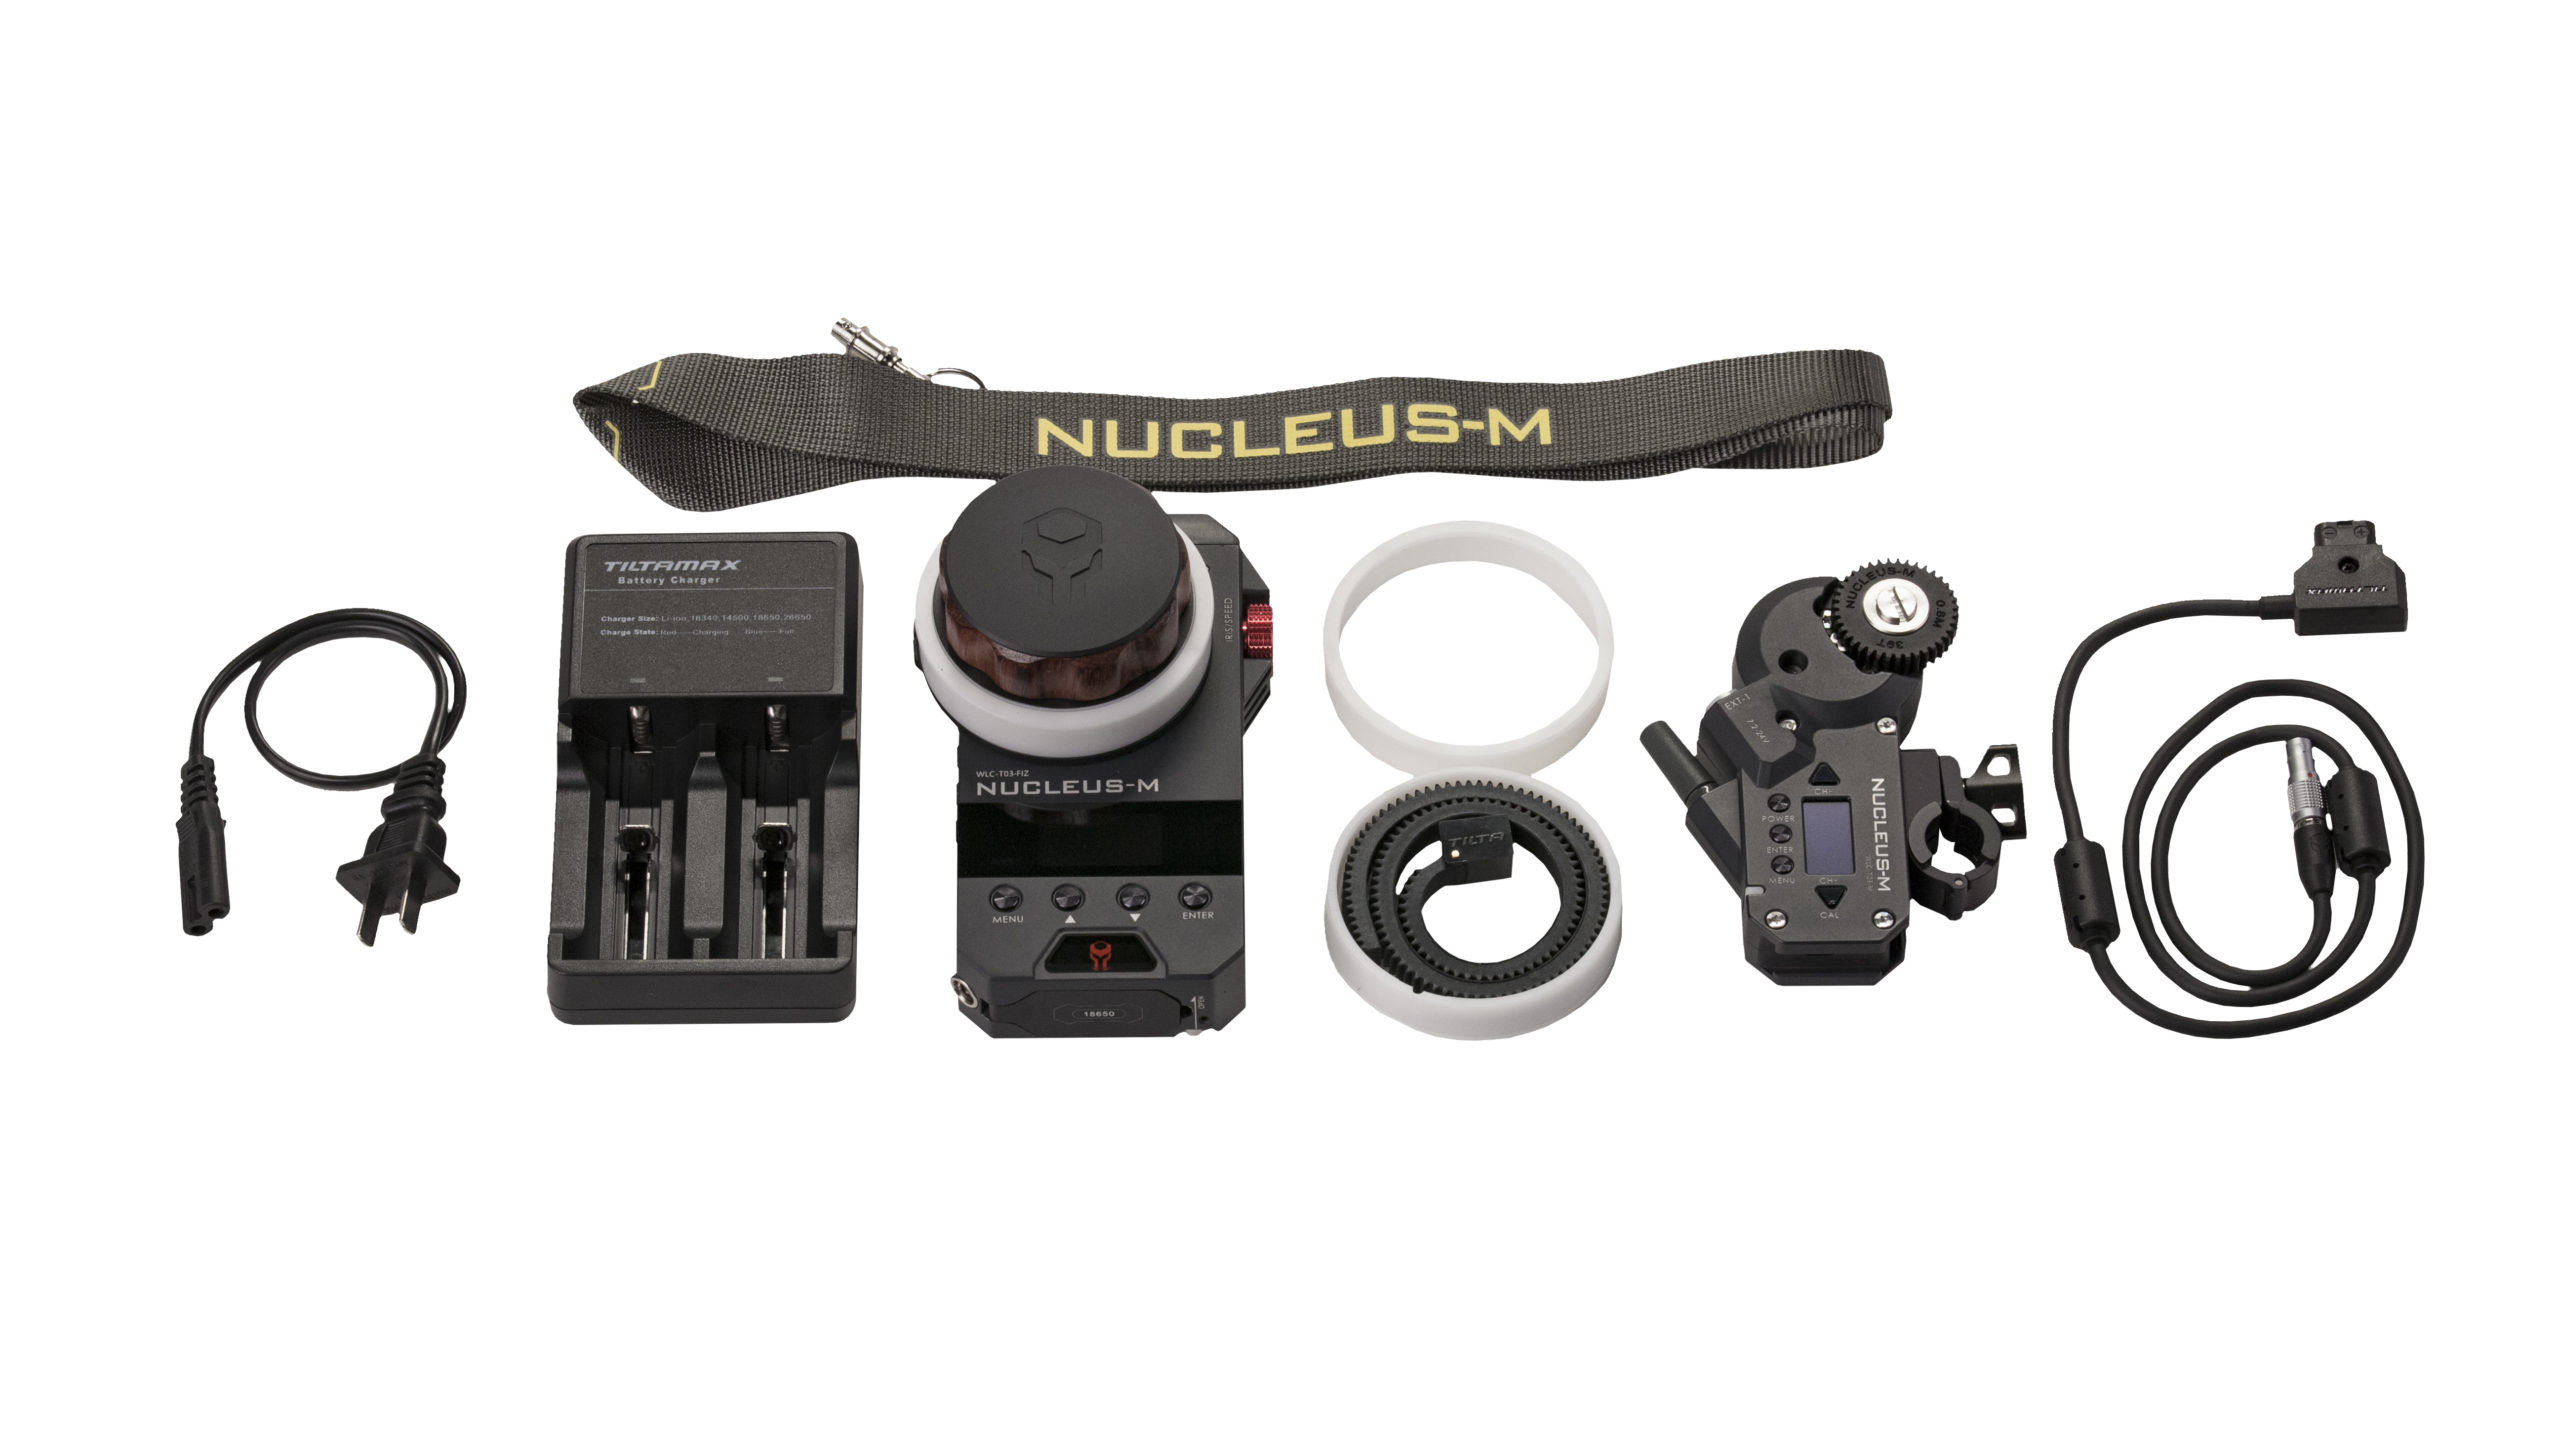 Nucleus-M: Wireless Lens Control System